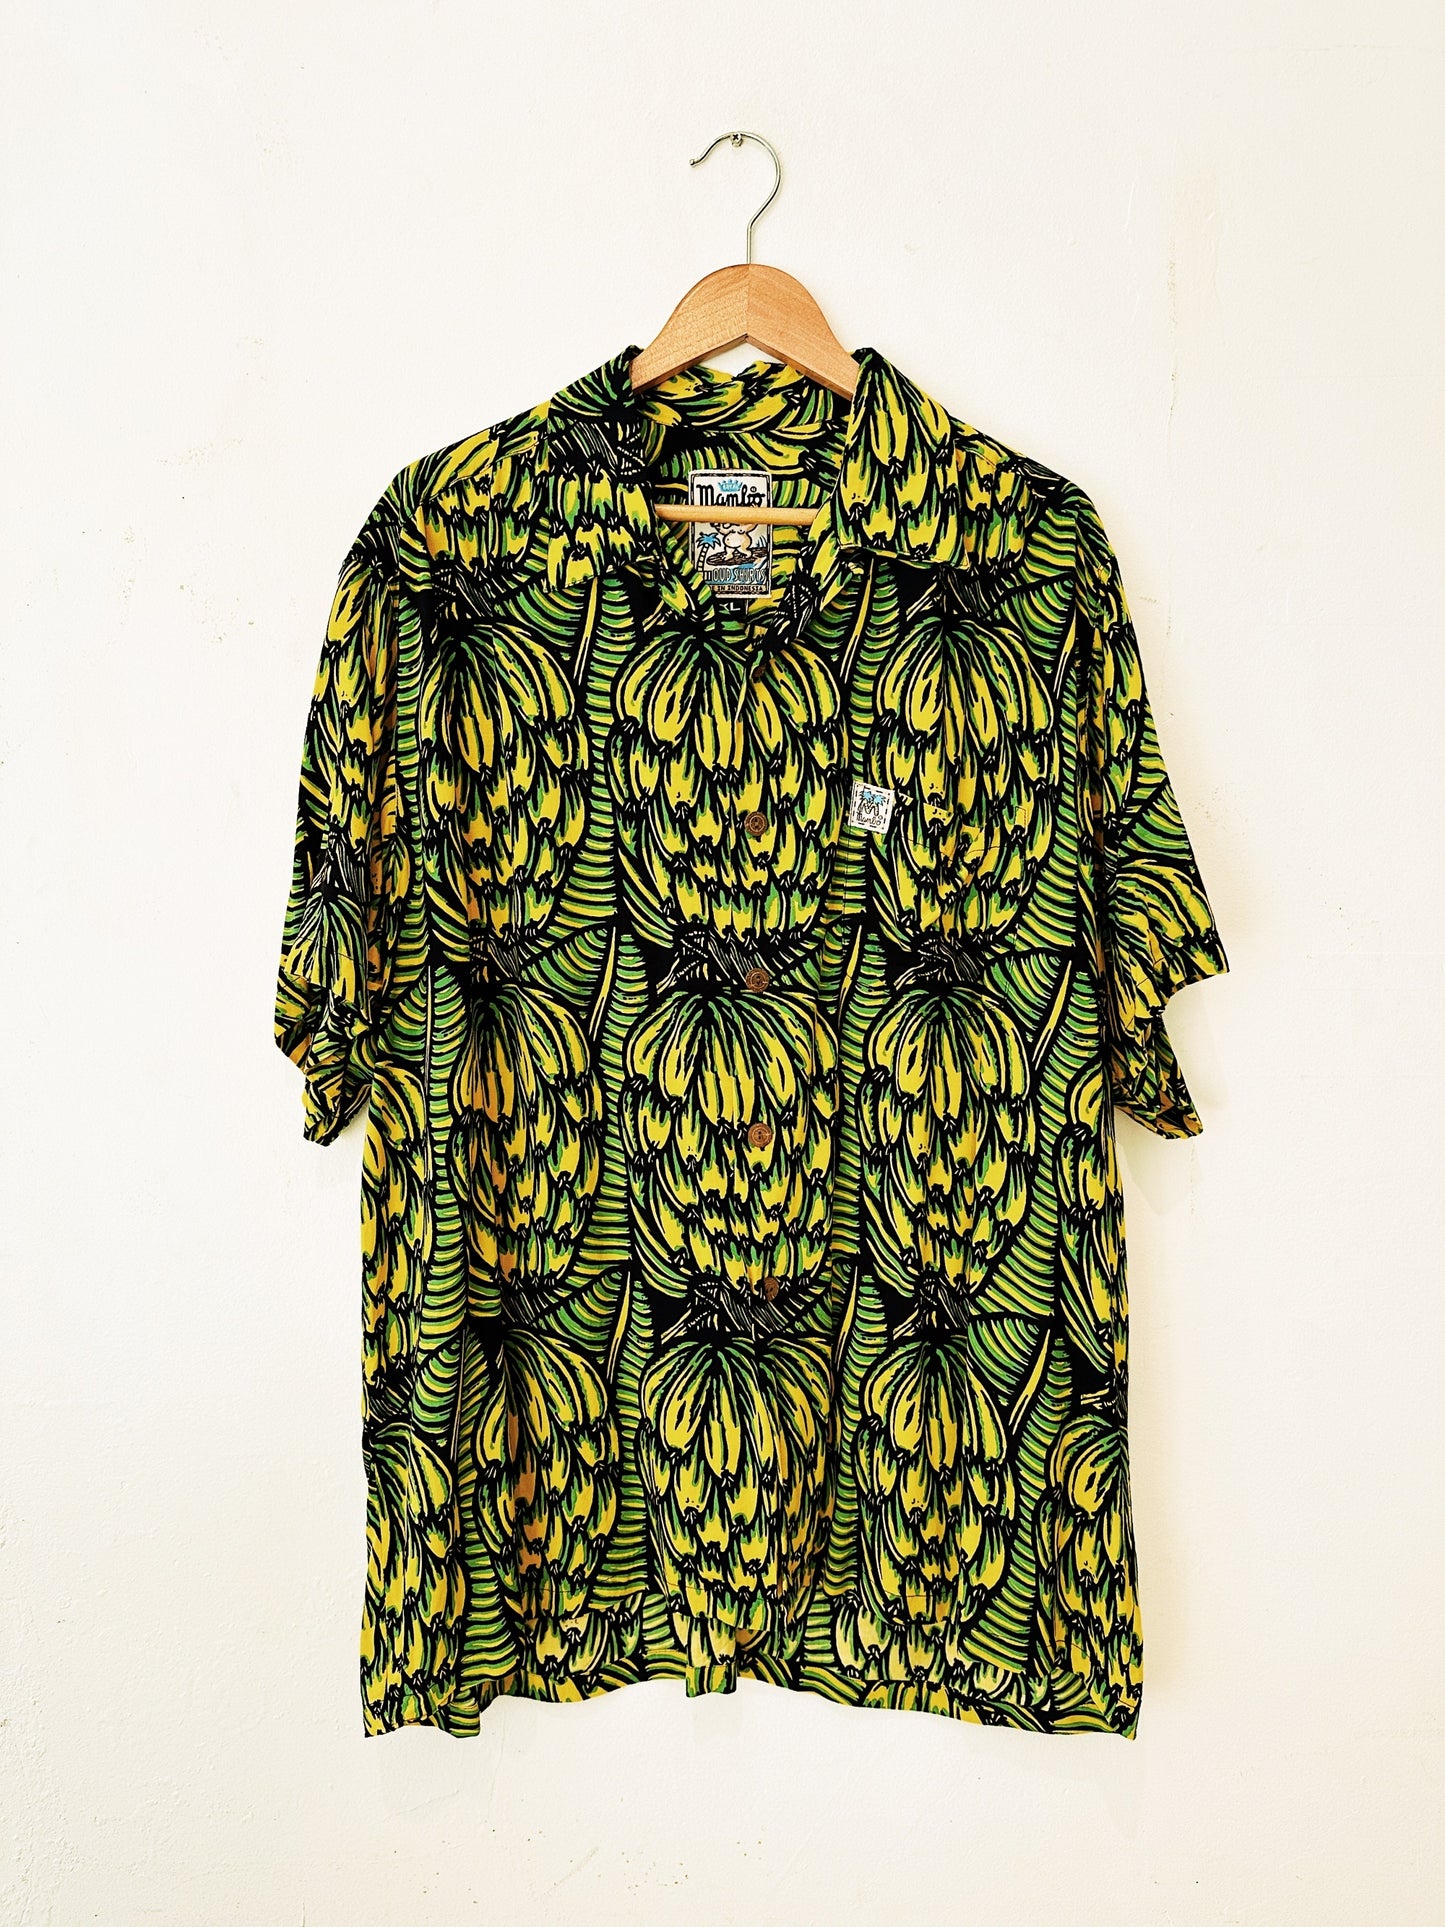 Bruce Goold "Banana's" Vintage Mambo Loud Shirt (Green) 6